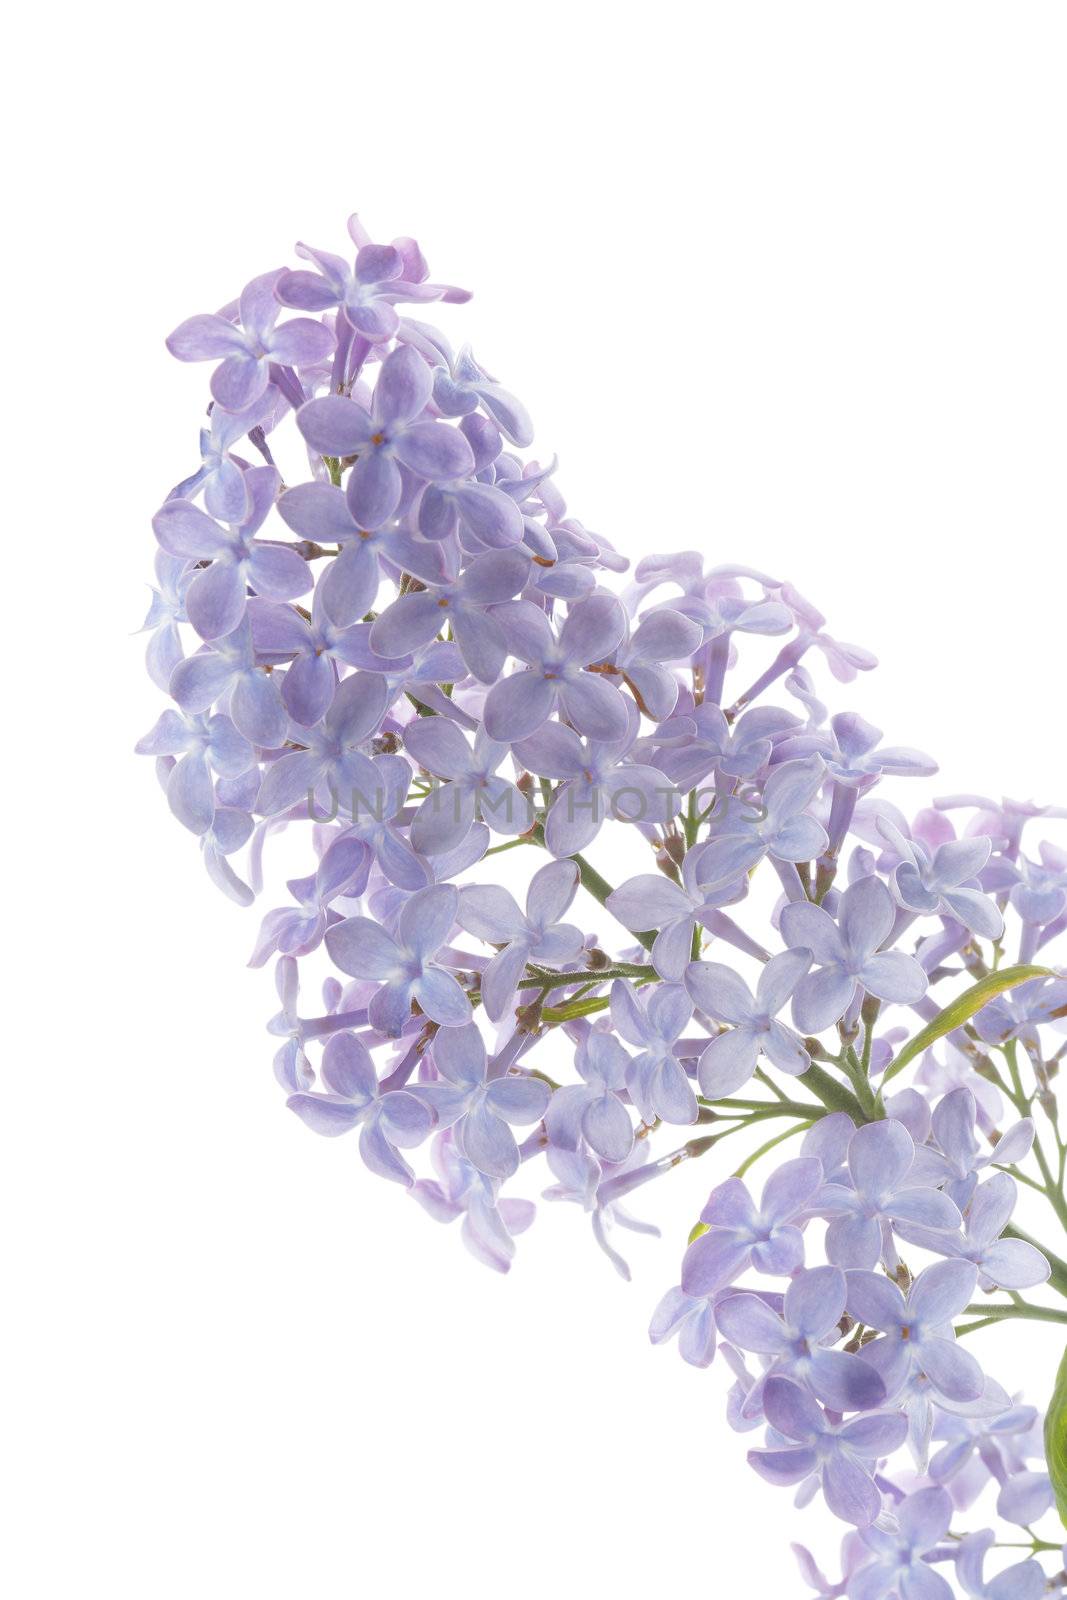 Common lilac flower (Syringa vulgaris) detail on white background